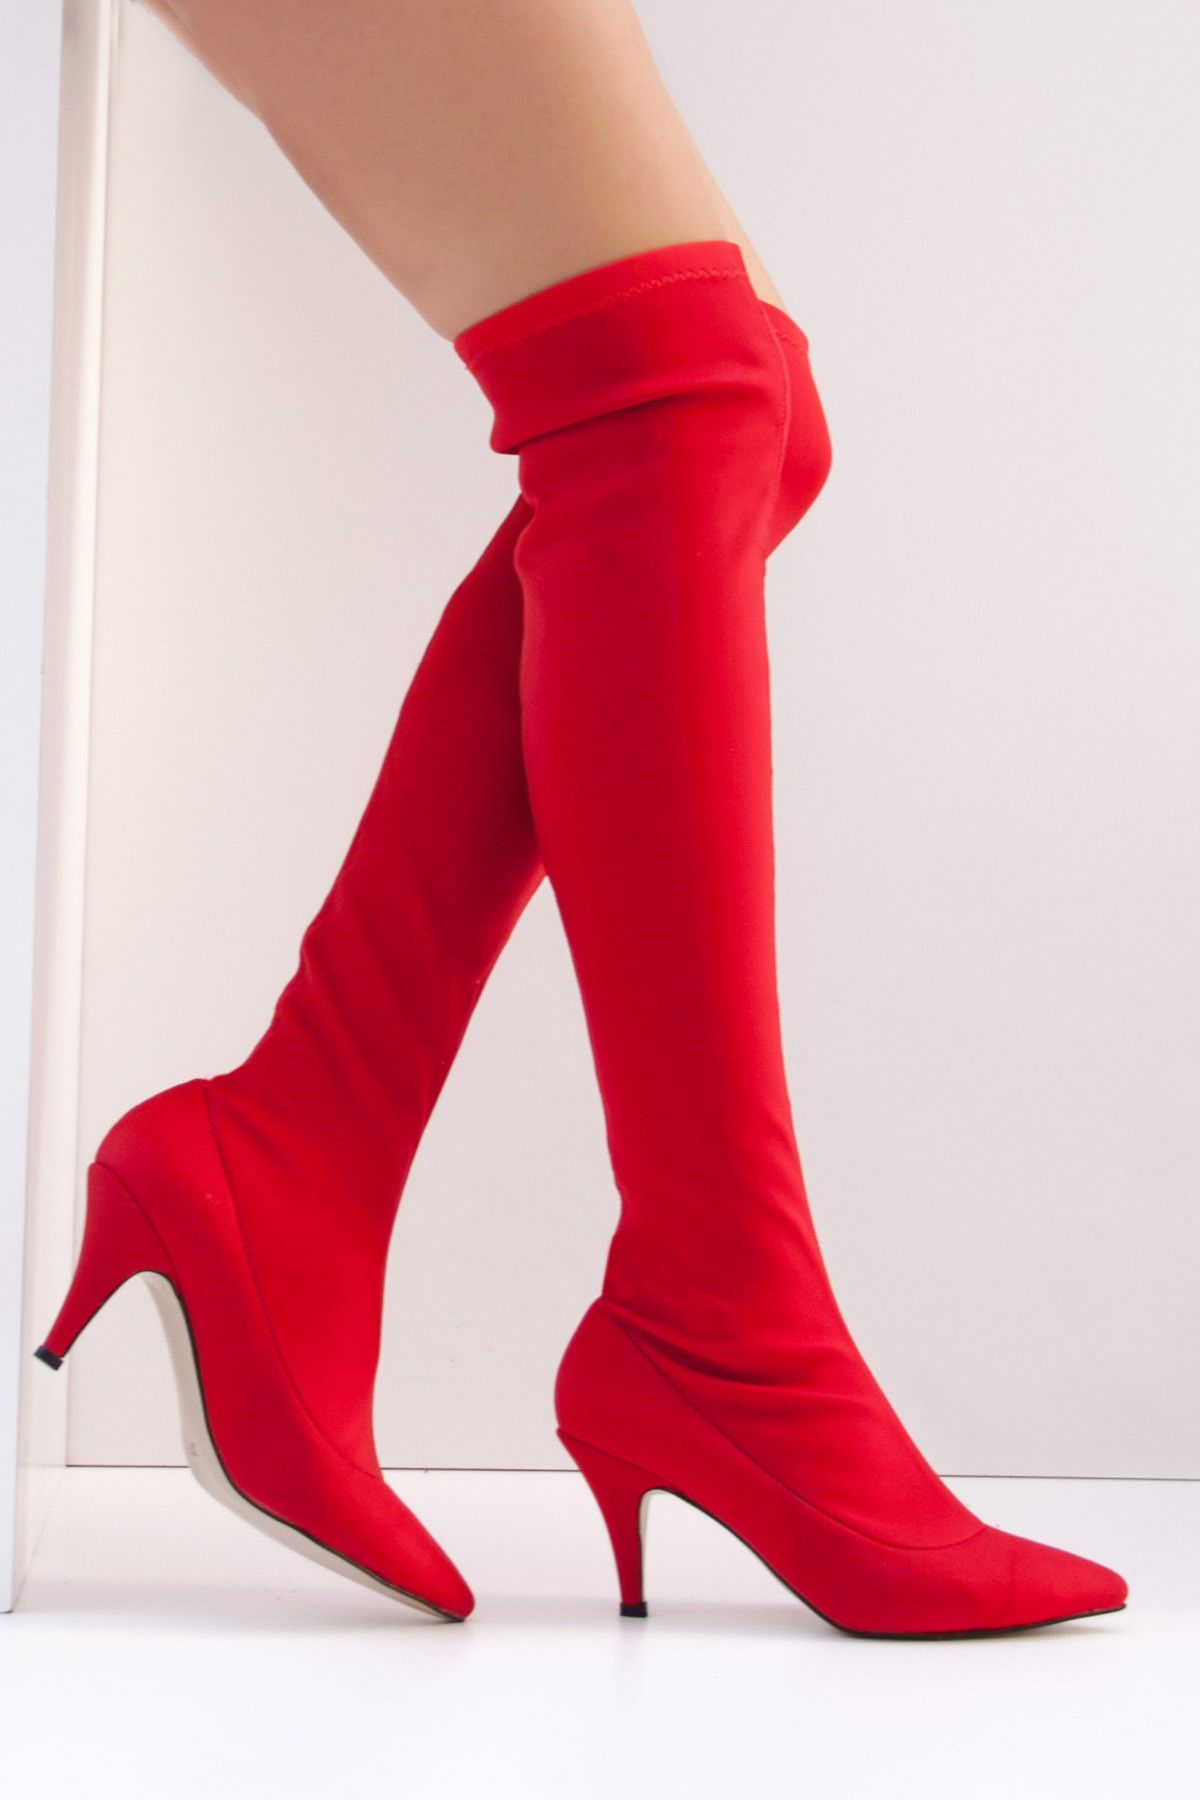 Fox Shoes Kırmızı Kadın Çizme C372541704